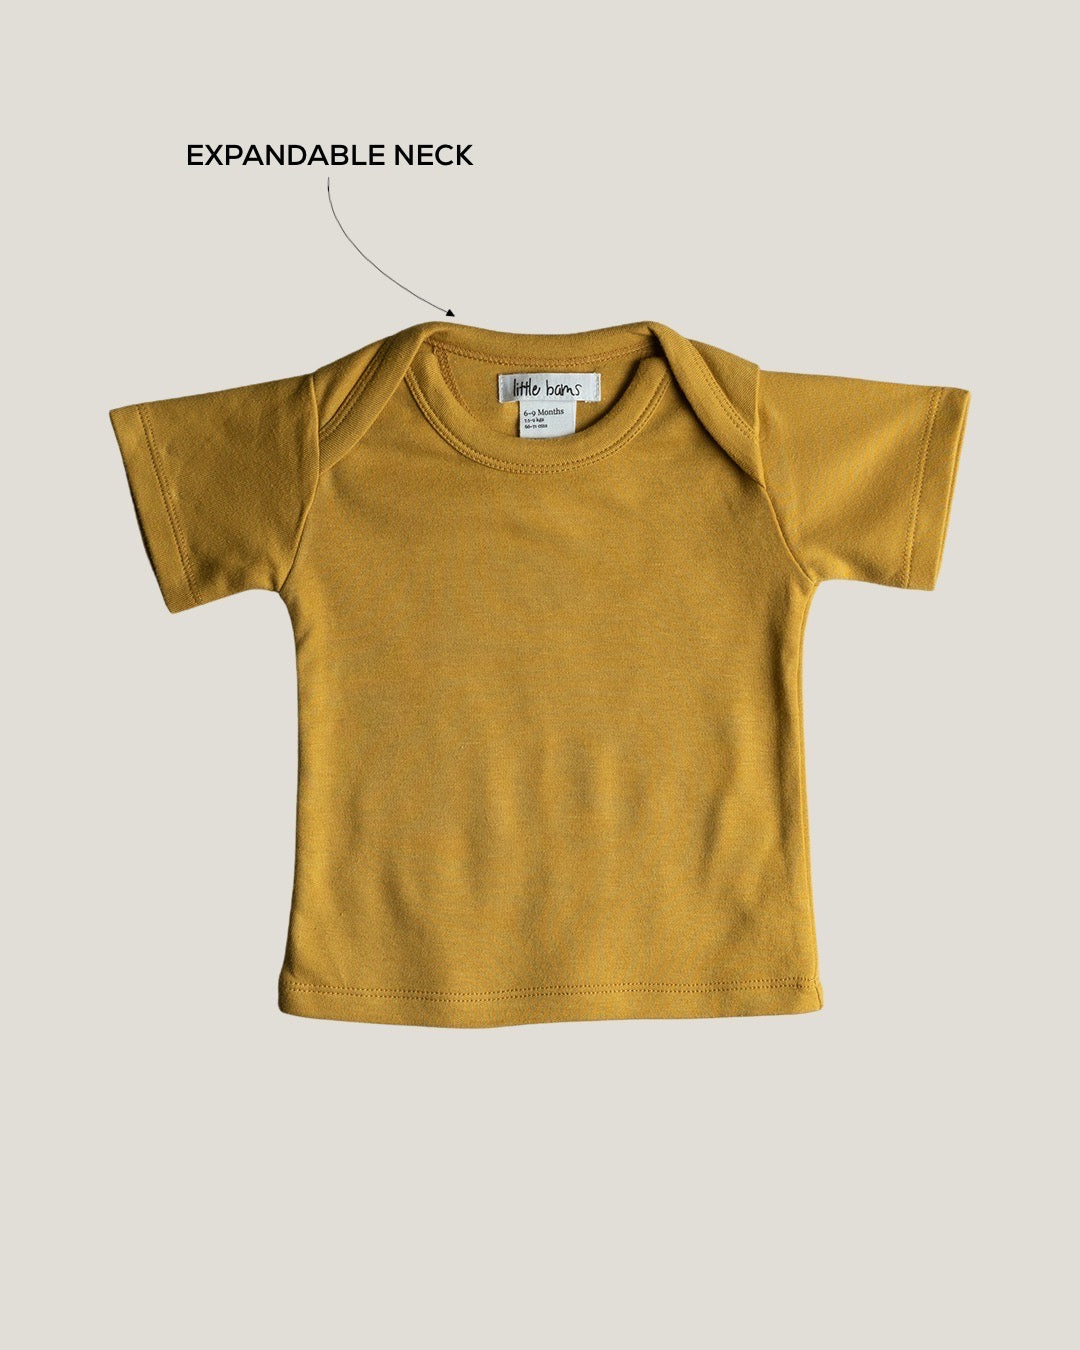 T-shirt in Mustard